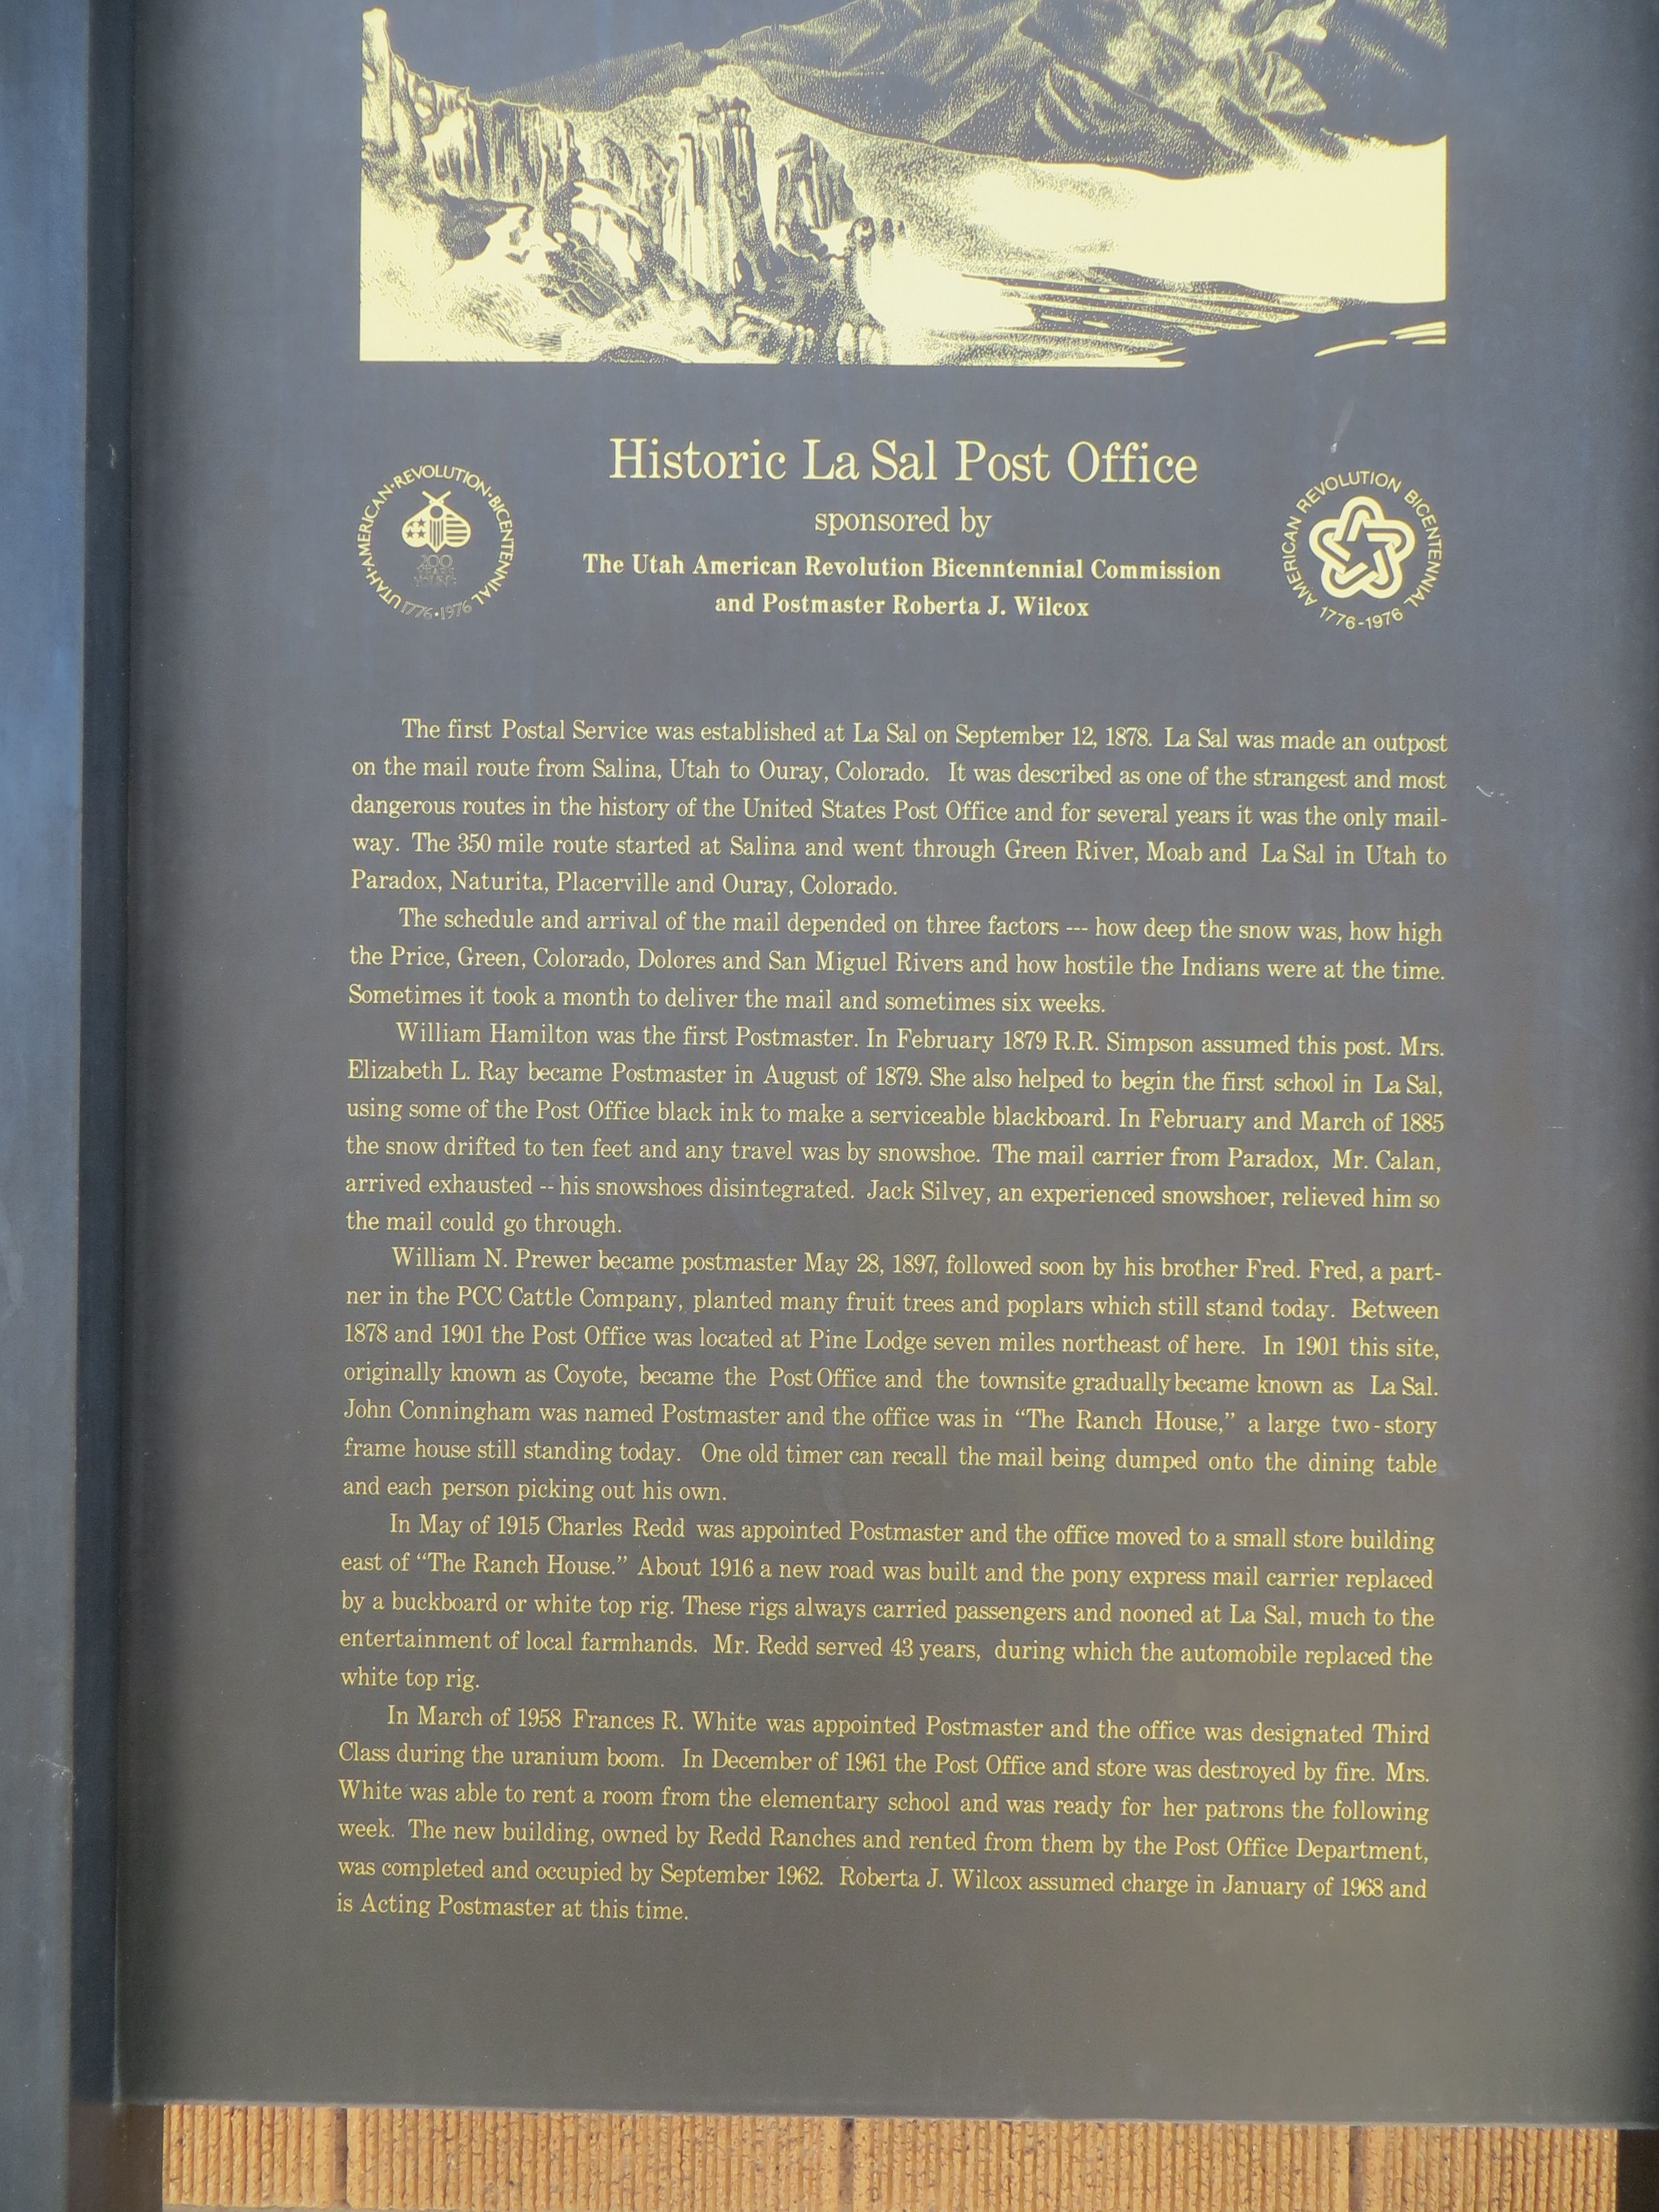 Historic La Sal Post Office Marker